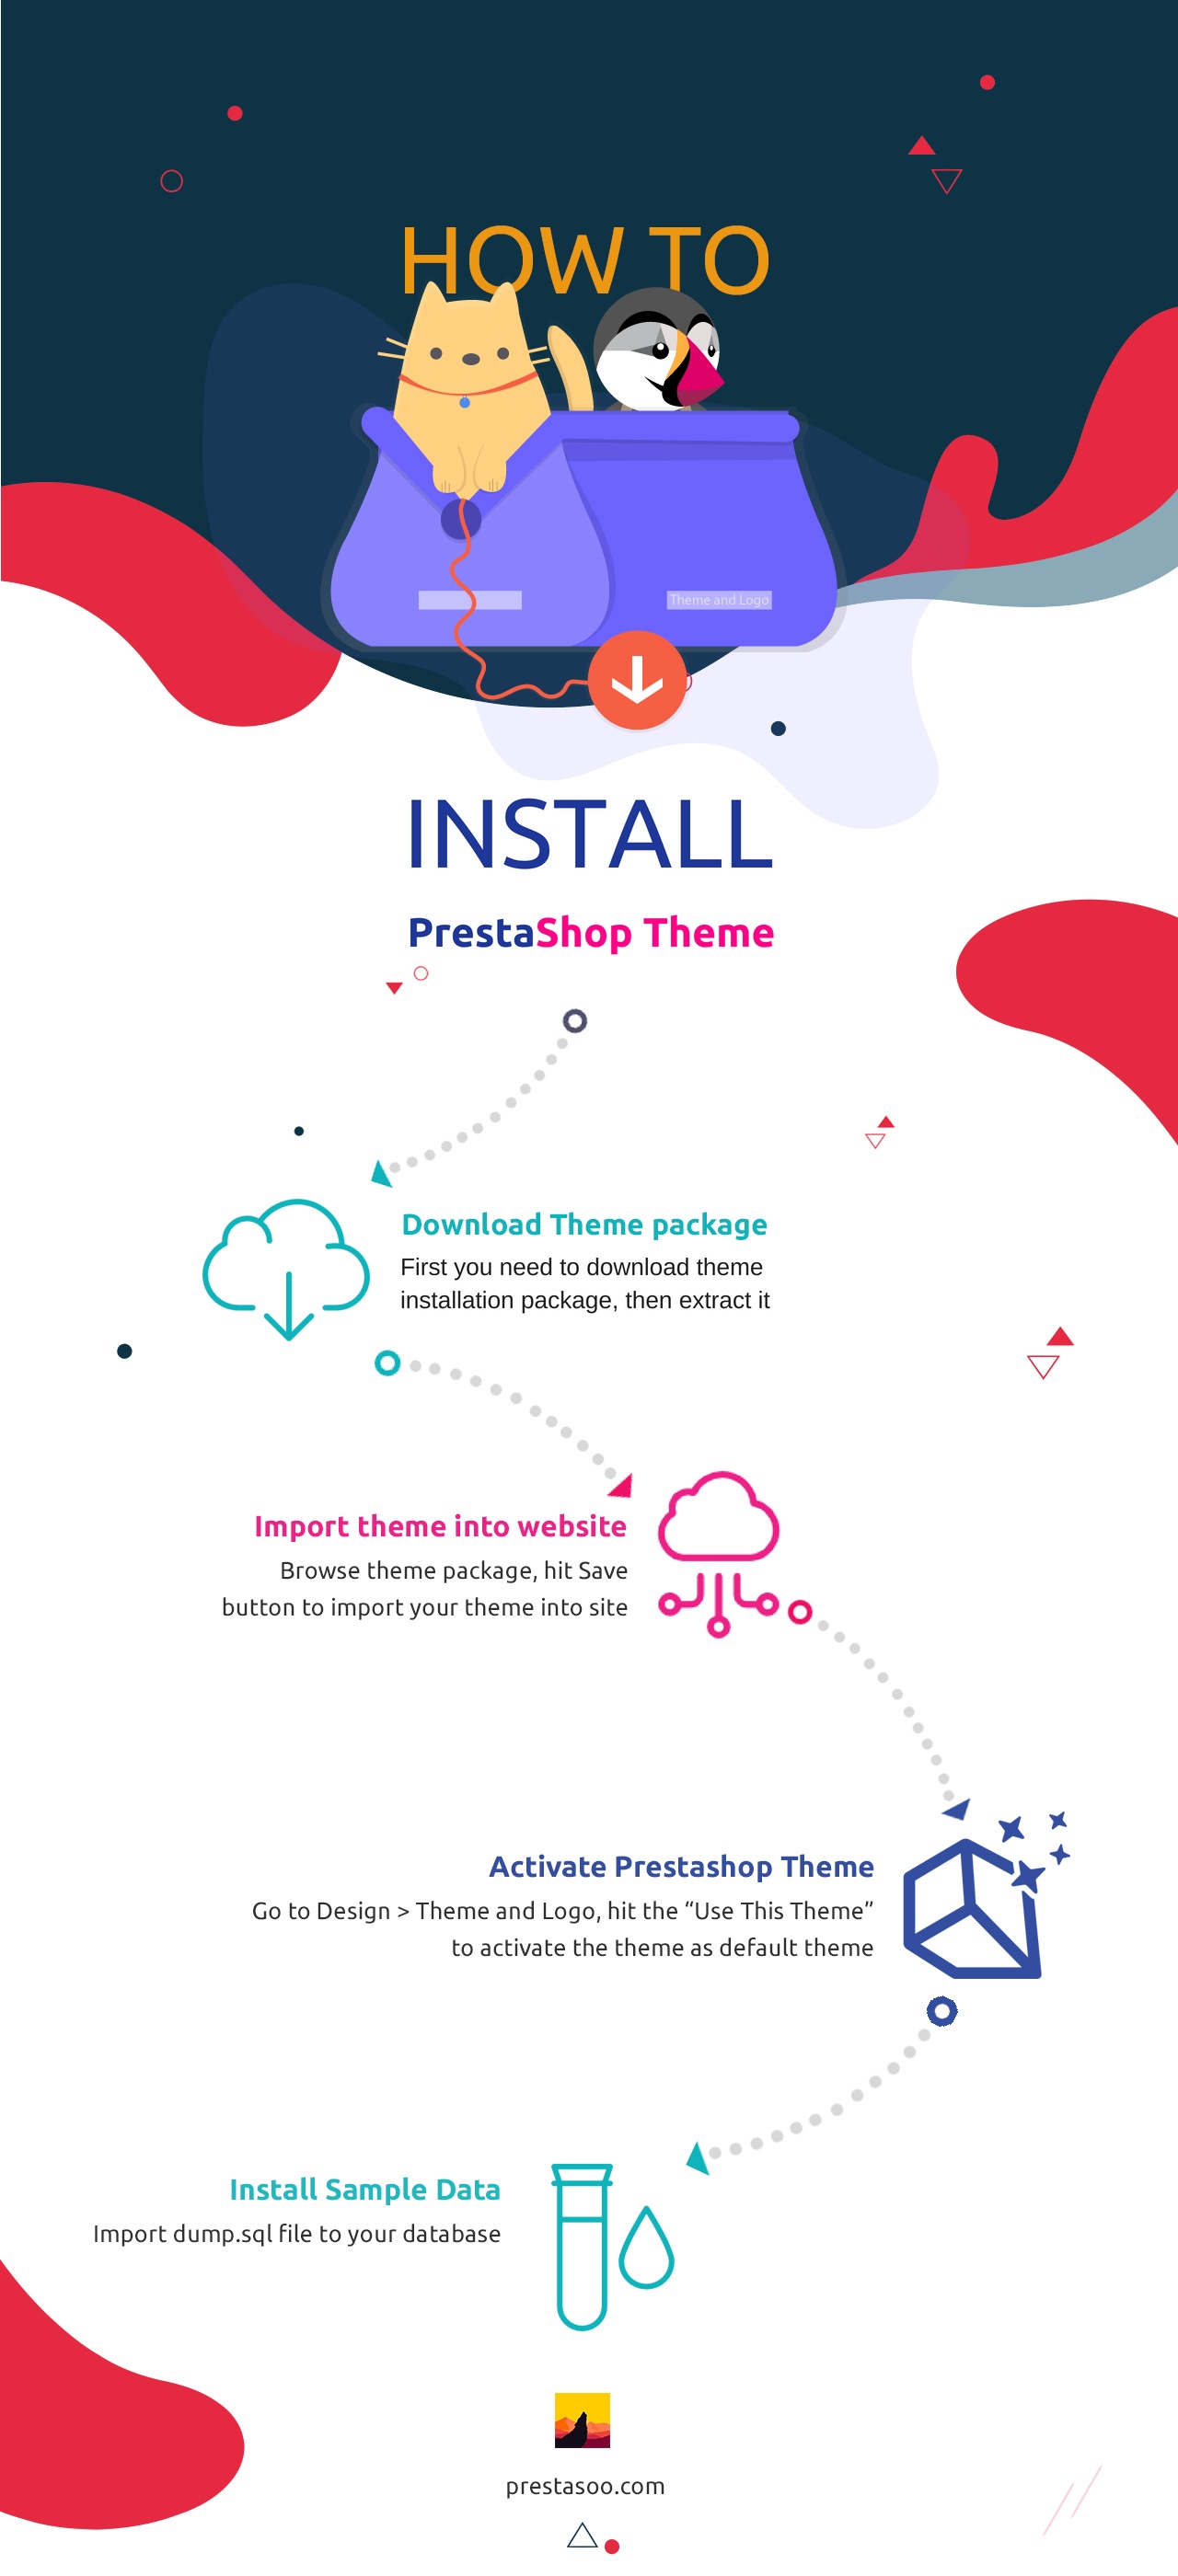 How to Install Prestashop Theme - Infographic